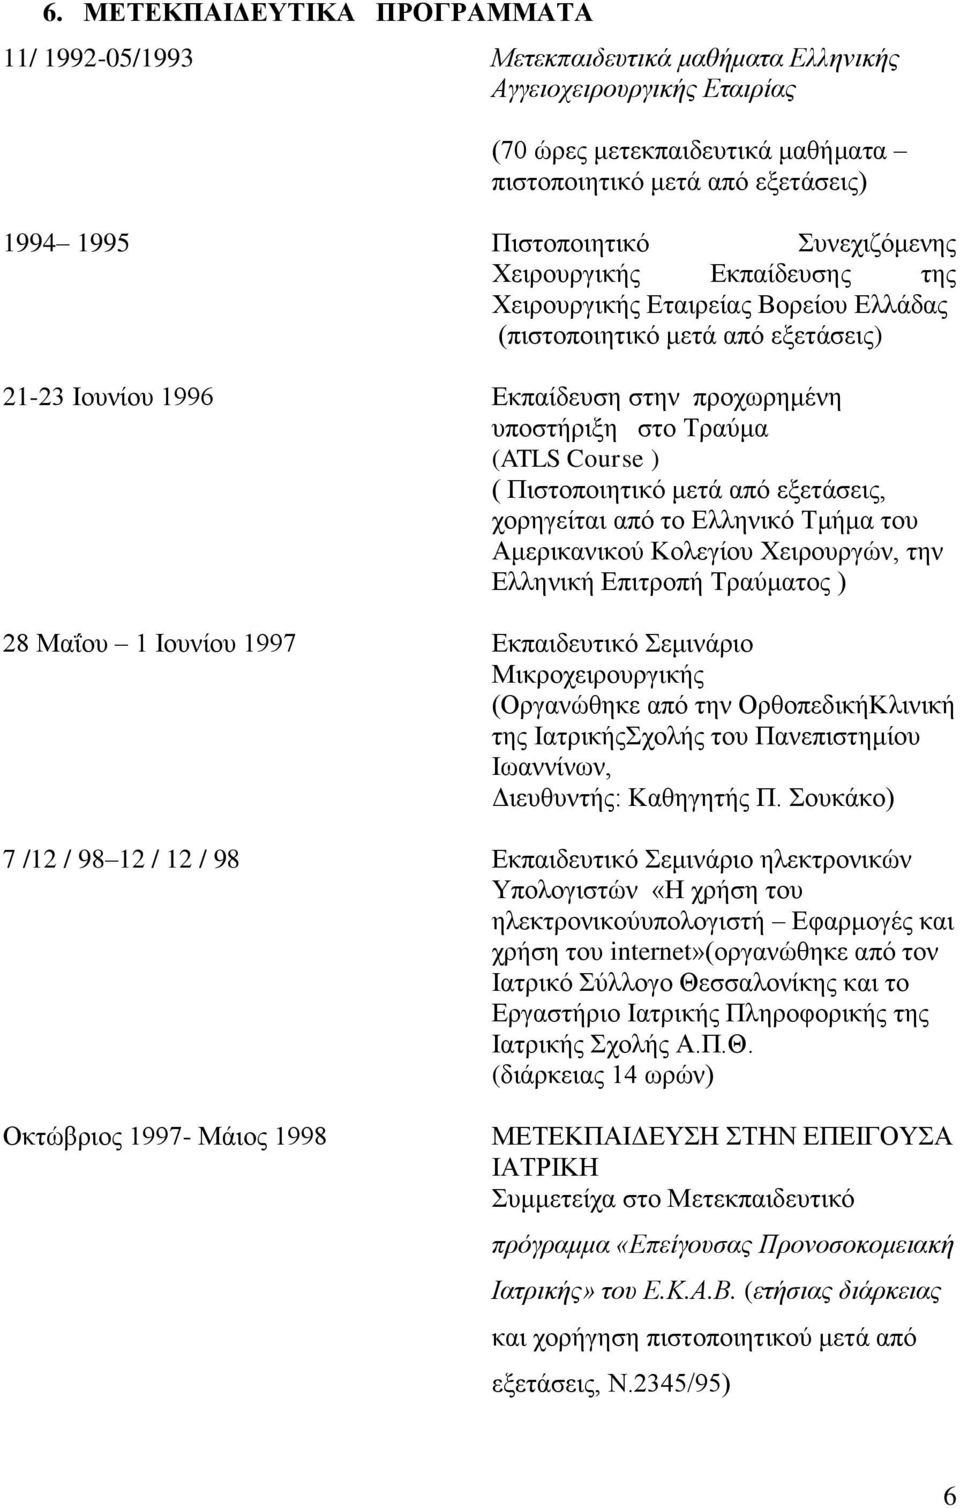 (ATLS Course ) ( Πιστοποιητικό μετά από εξετάσεις, χορηγείται από το Ελληνικό Τμήμα του Αμερικανικού Κολεγίου Χειρουργών, την Ελληνική Επιτροπή Τραύματος ) 28 Μαΐου 1 Ιουνίου 1997 Εκπαιδευτικό